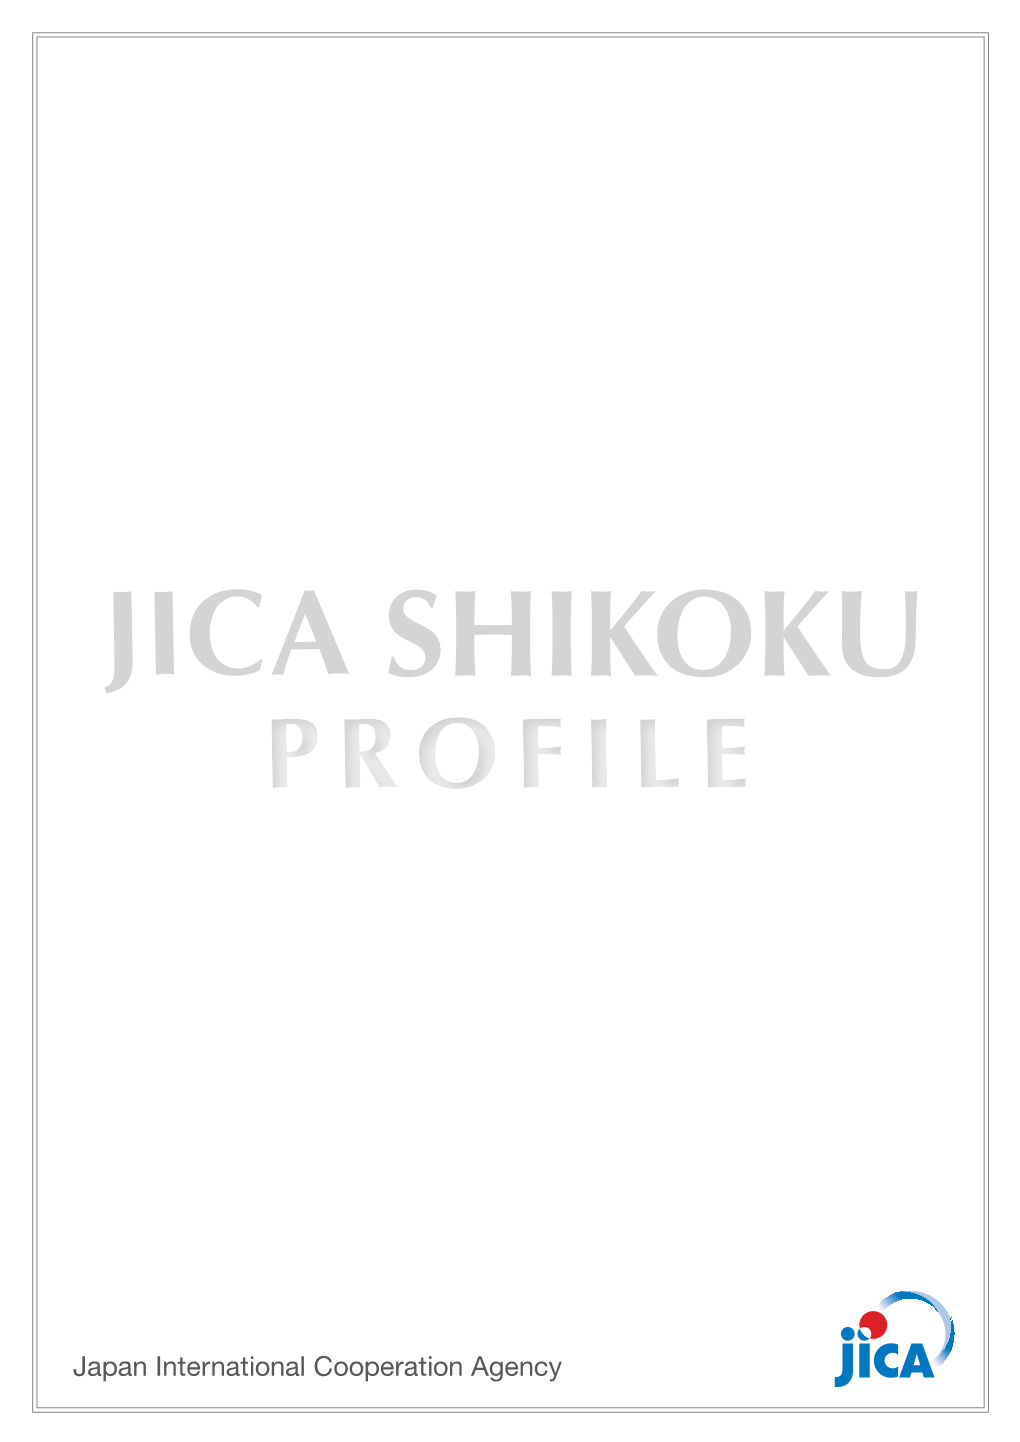 Jica Shikoku Profile